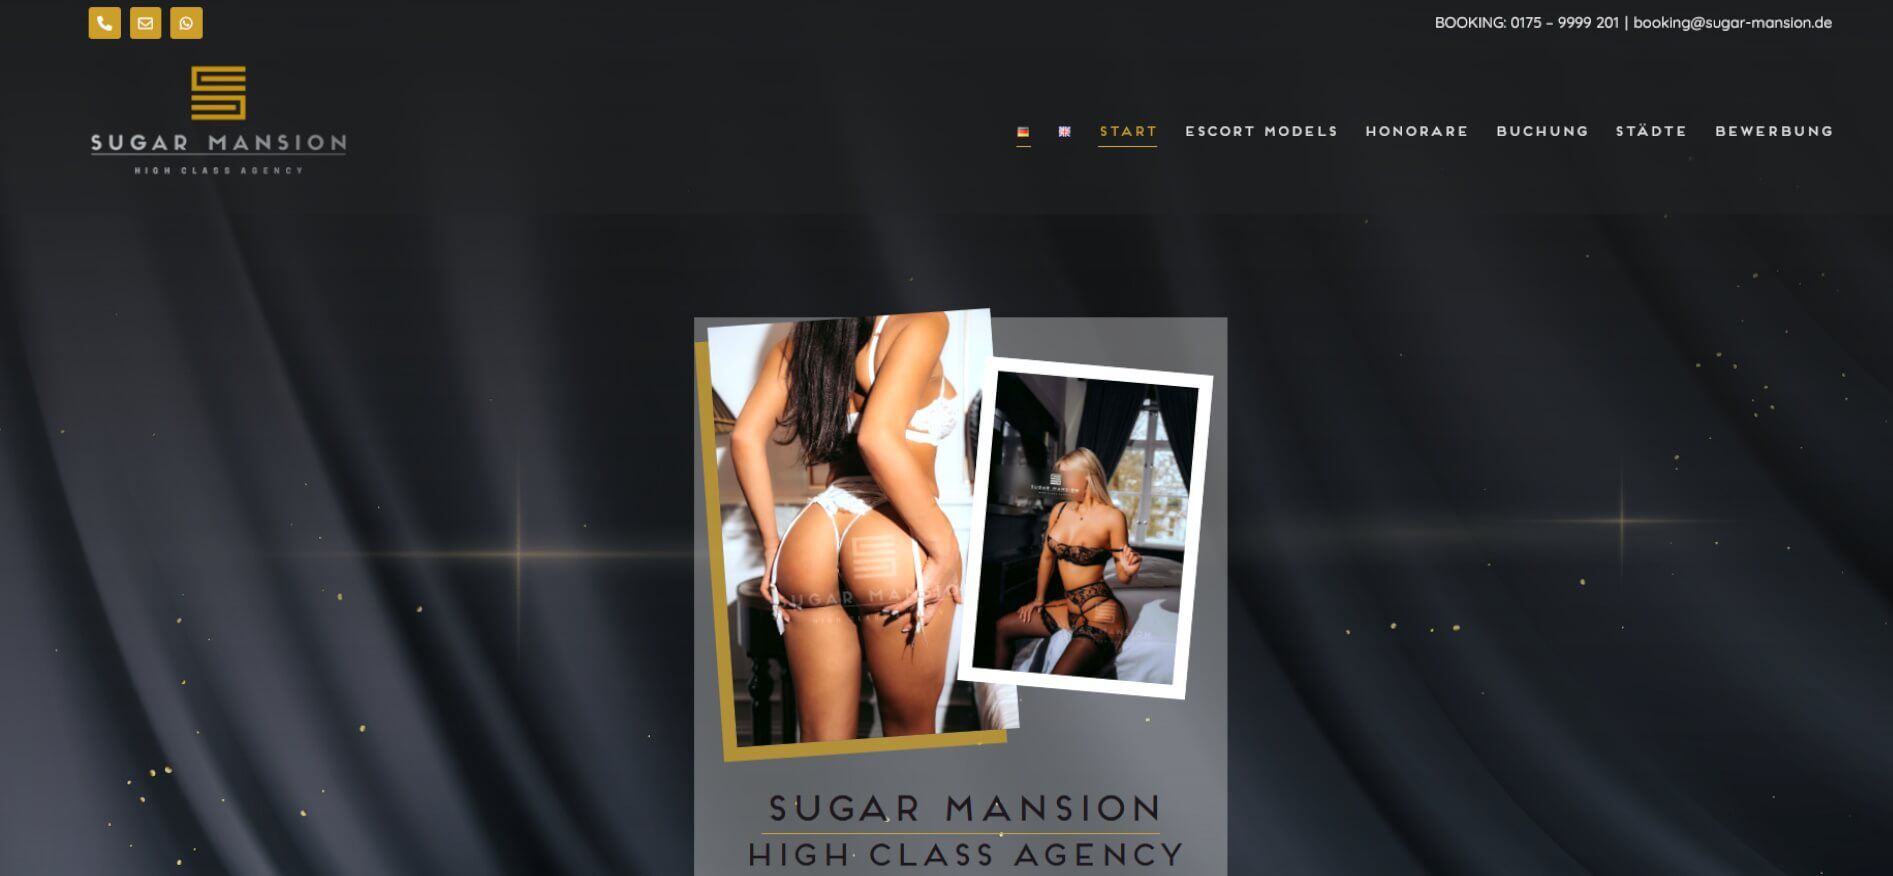 Sugar-Mansion Escort-Service